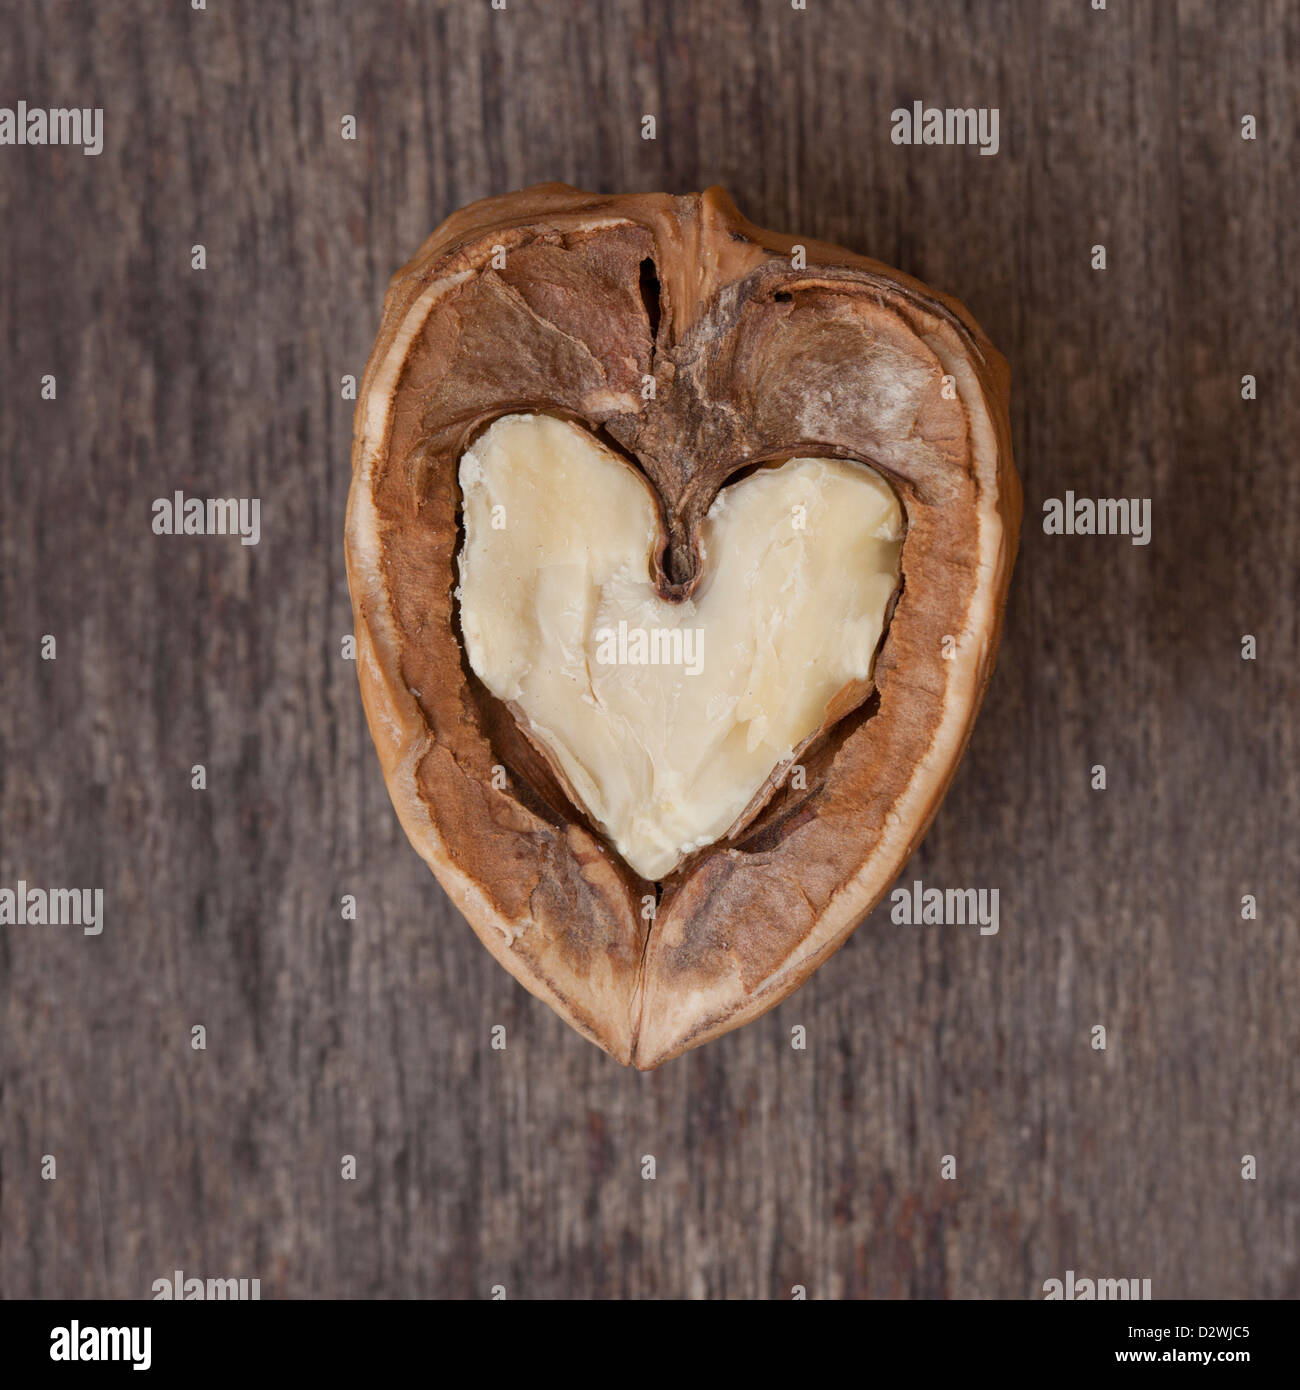 Open walnut with a heart shaped interior. Stock Photo